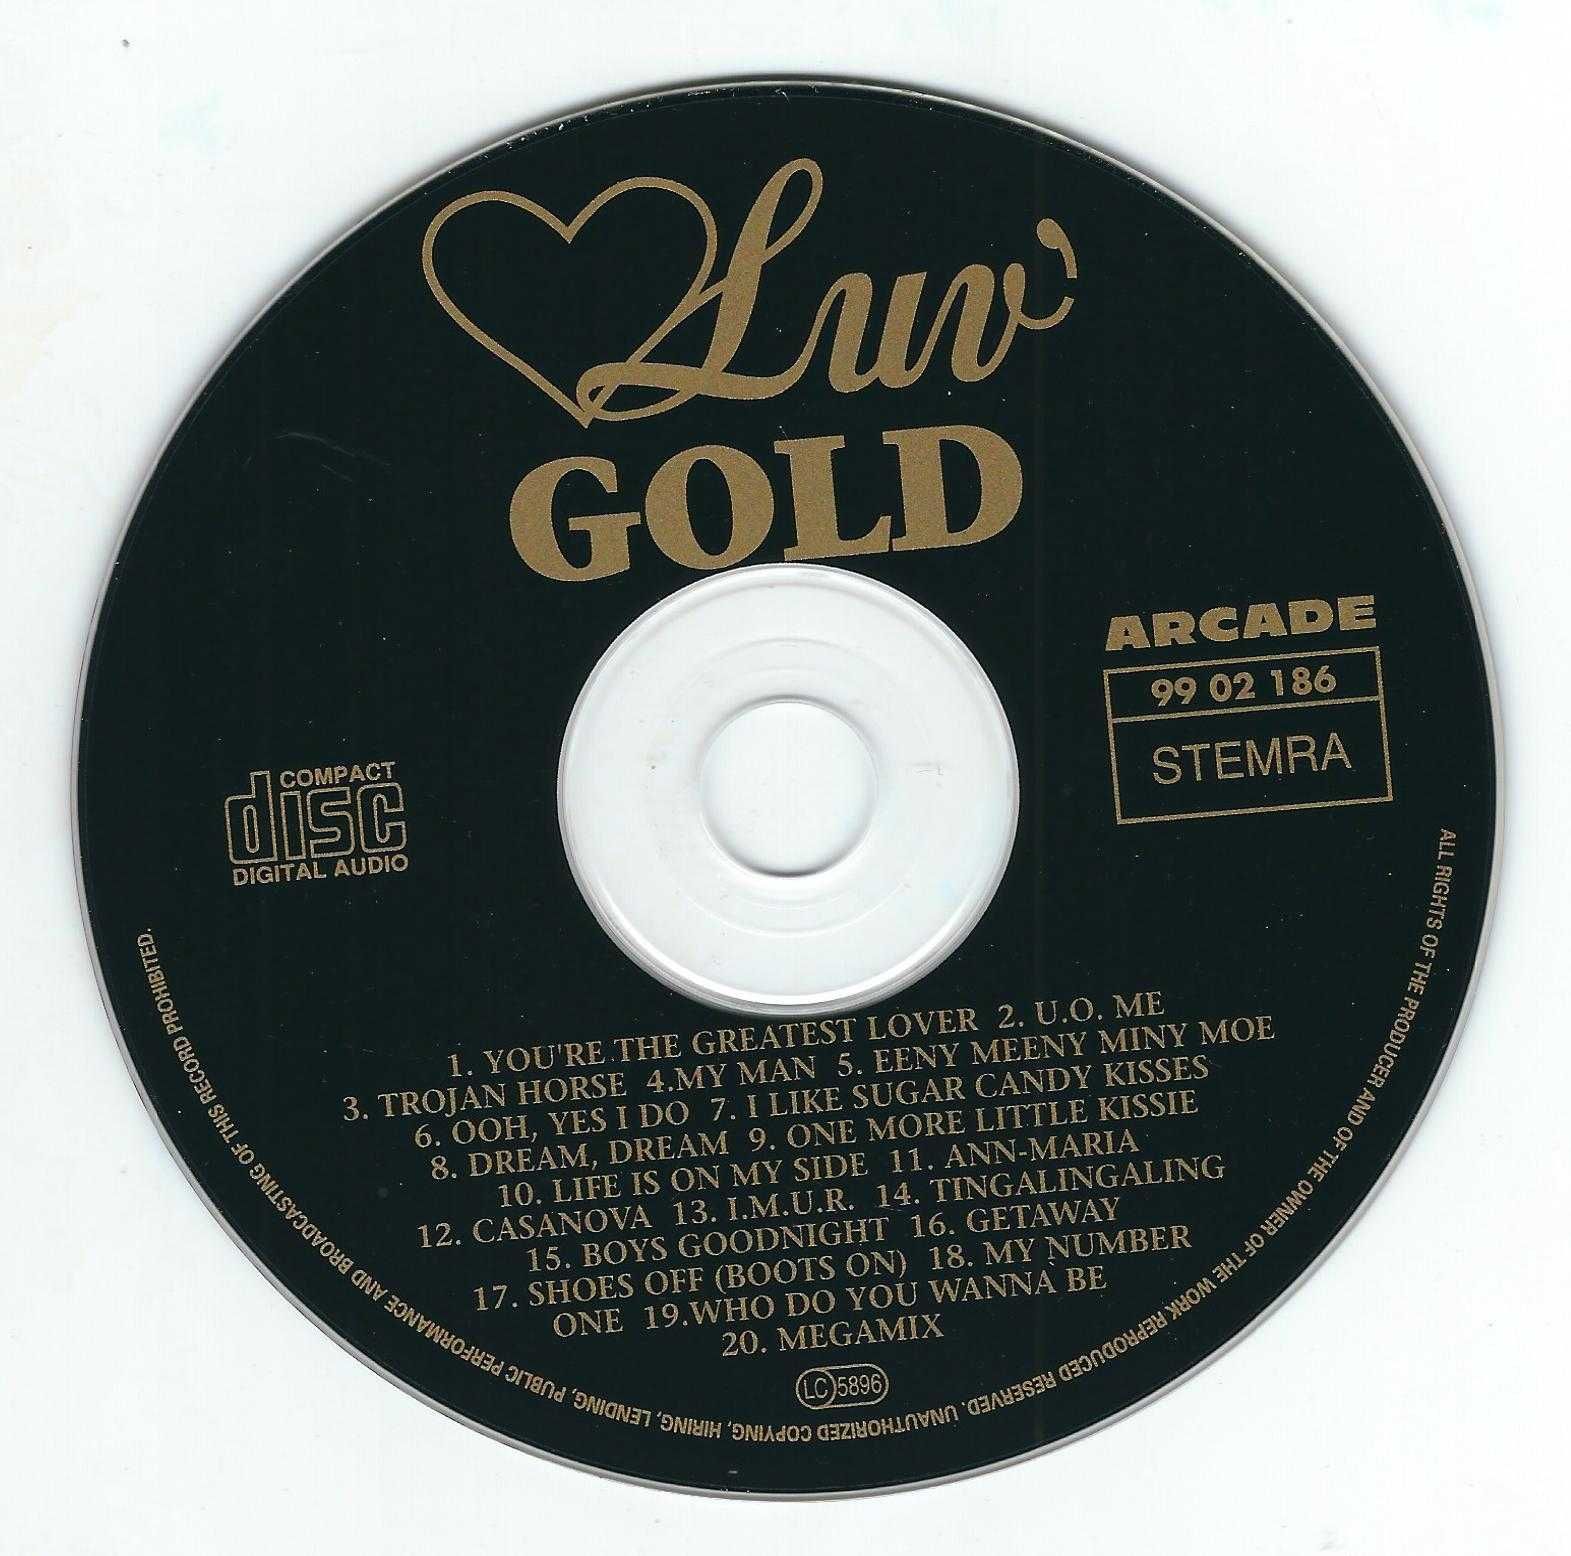 CD Luv' - Gold (1993) (Arcade)